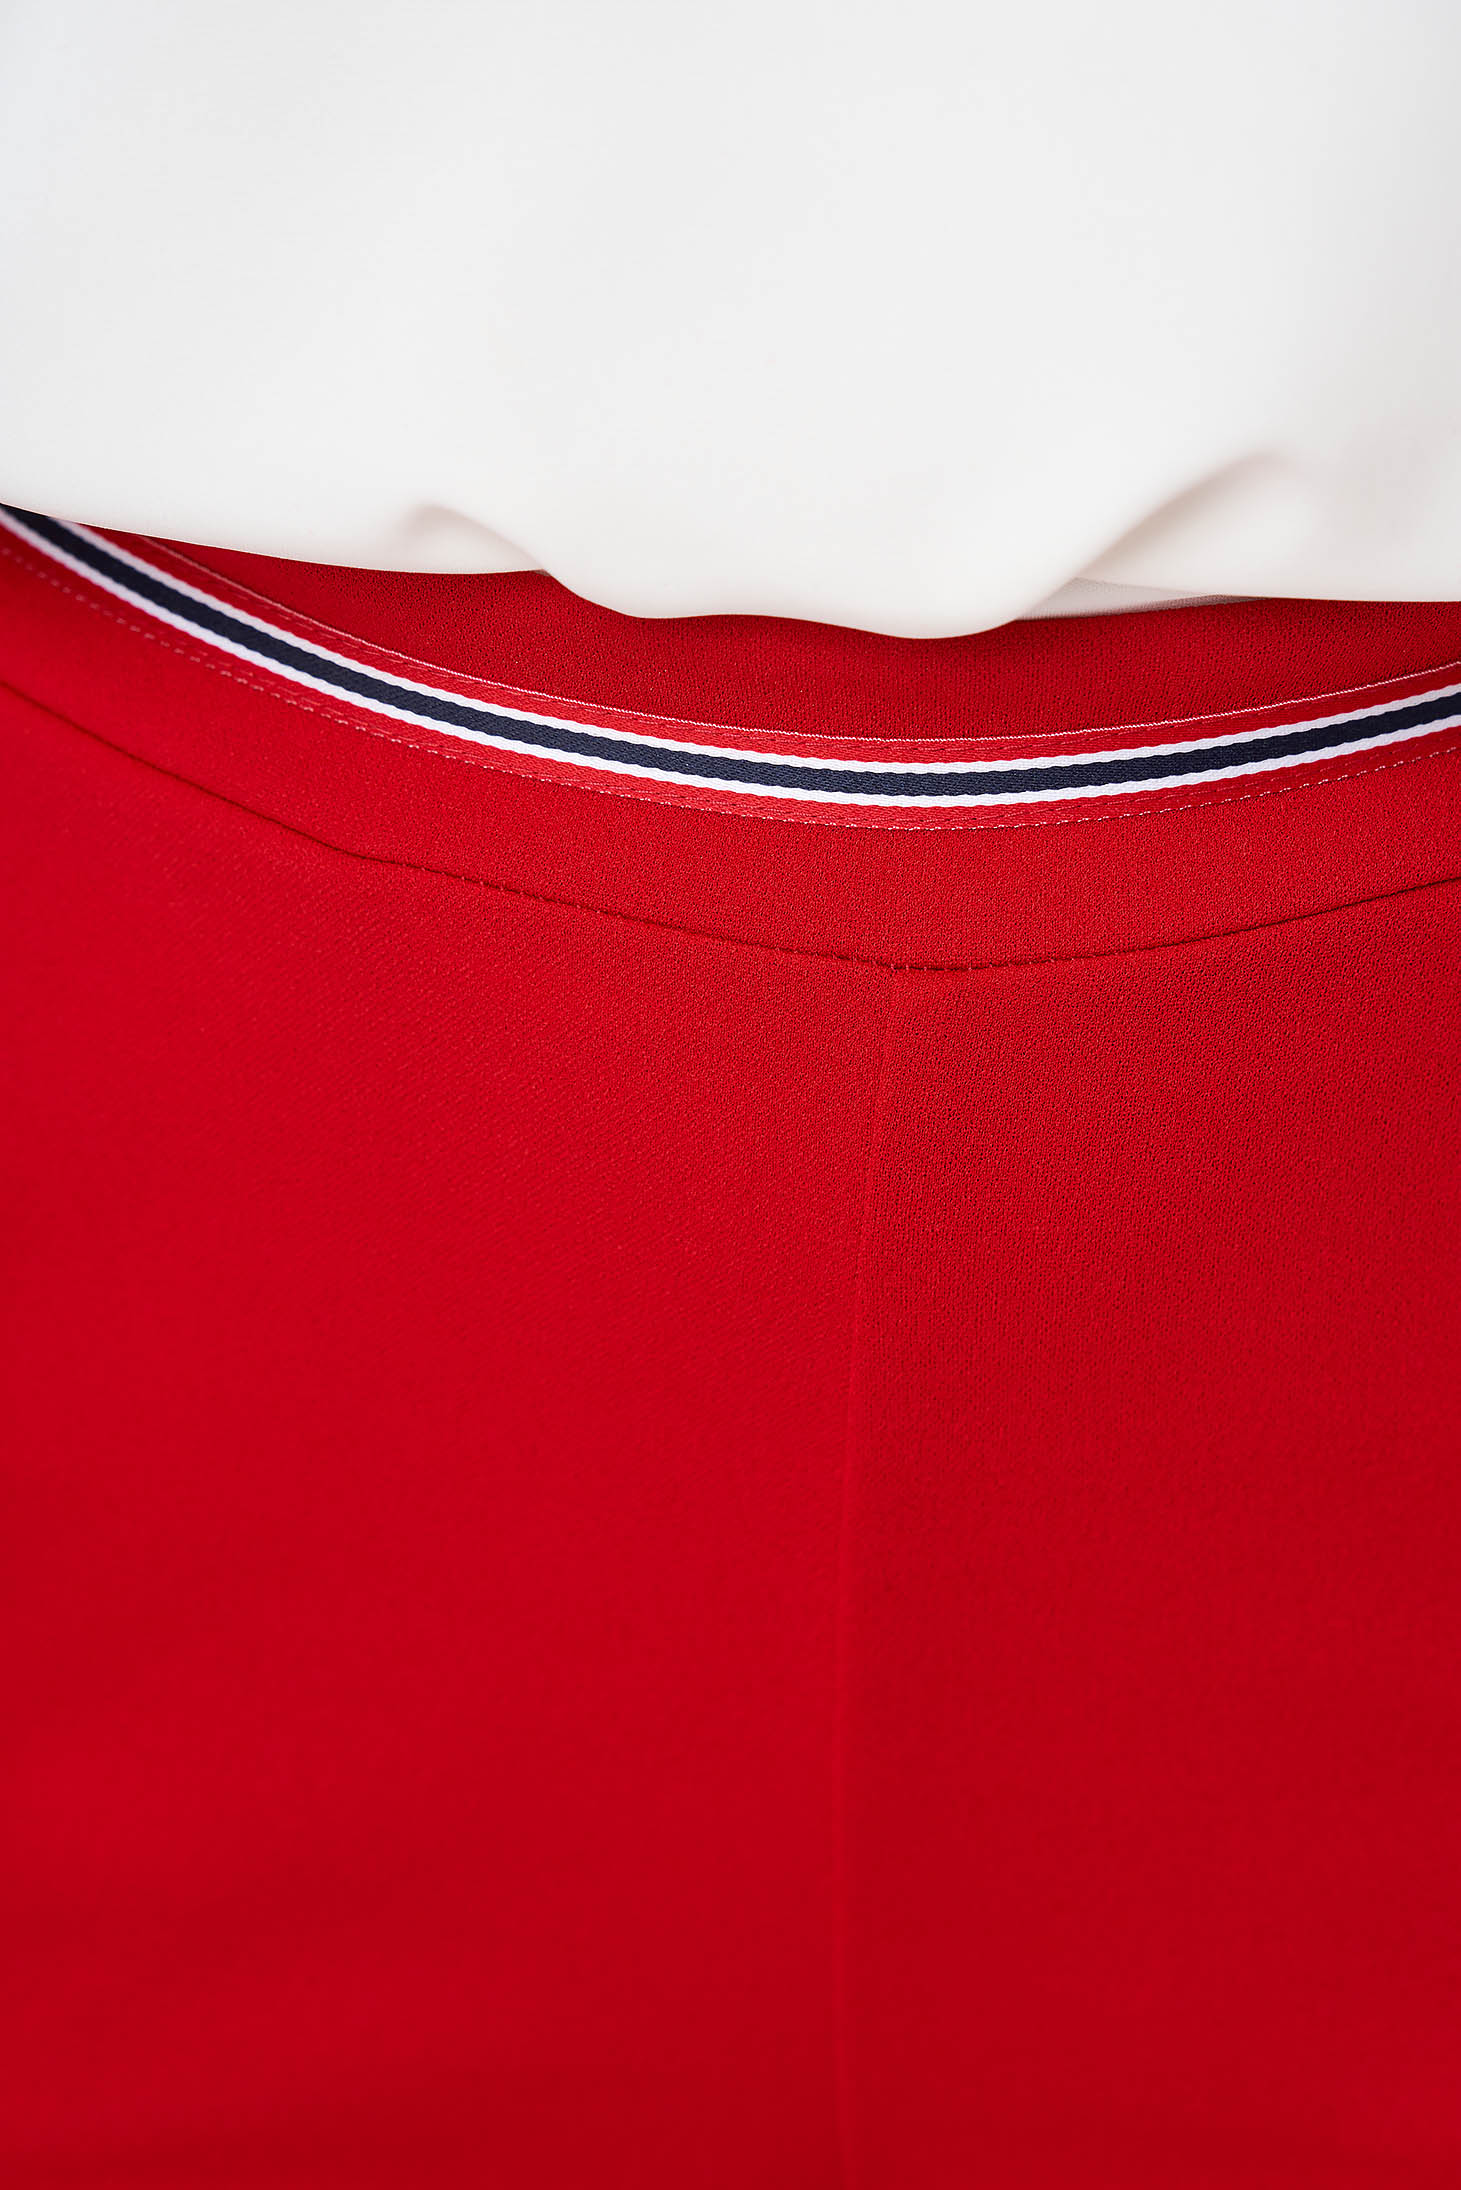 Pantaloni din crep rosii lungi evazati cu buzunare - StarShinerS 6 - StarShinerS.ro